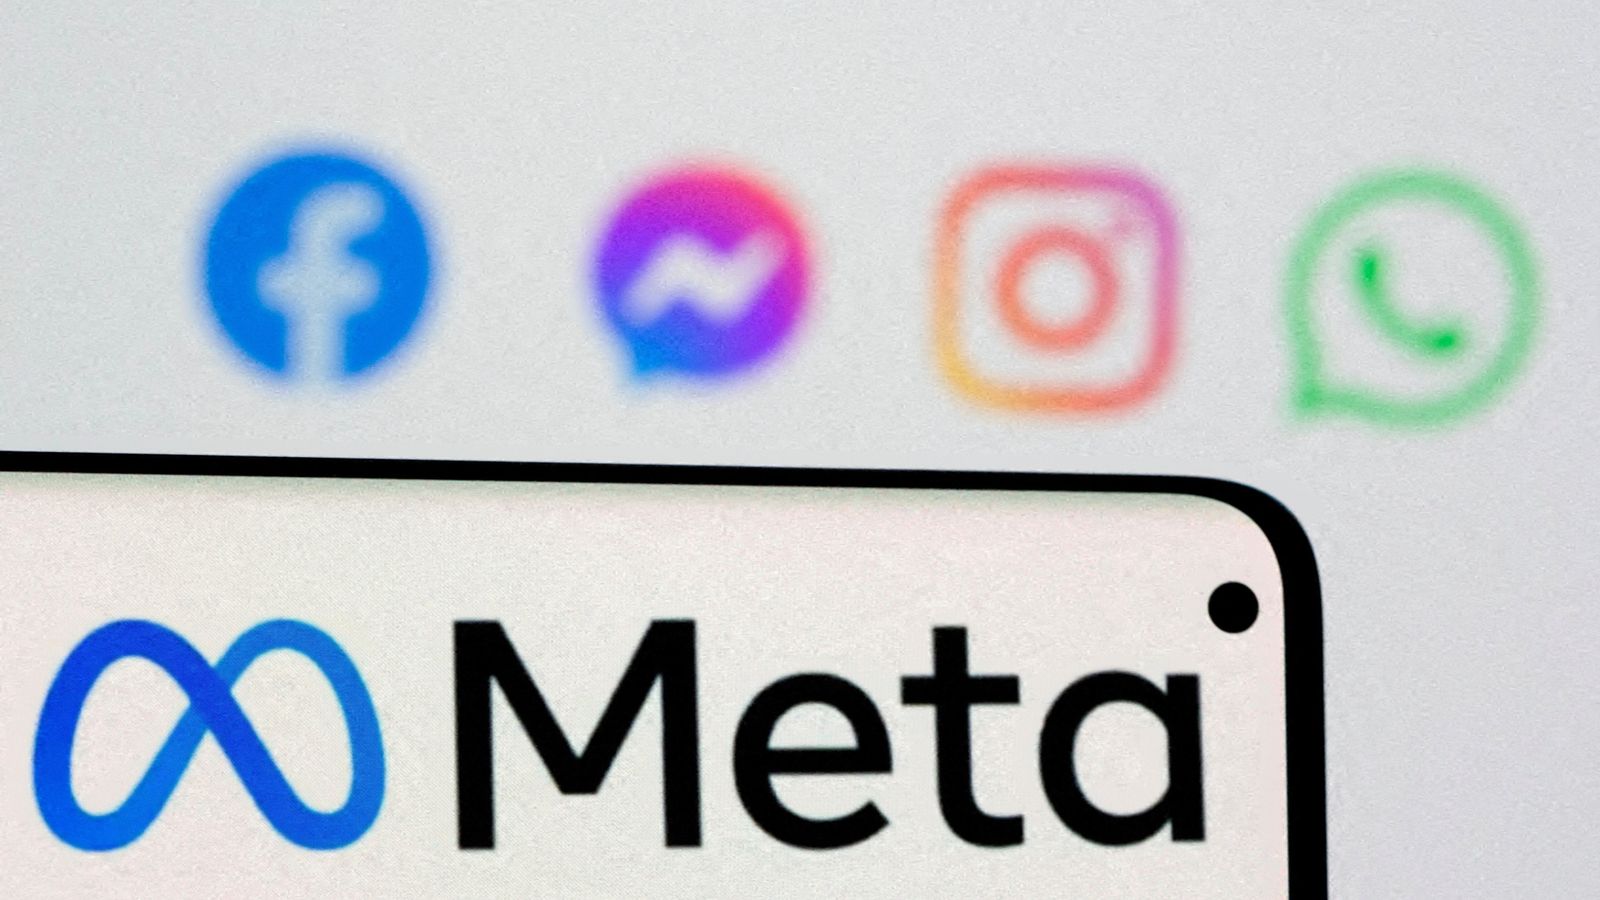 Facebook and Instagram adverts help boost Meta revenue